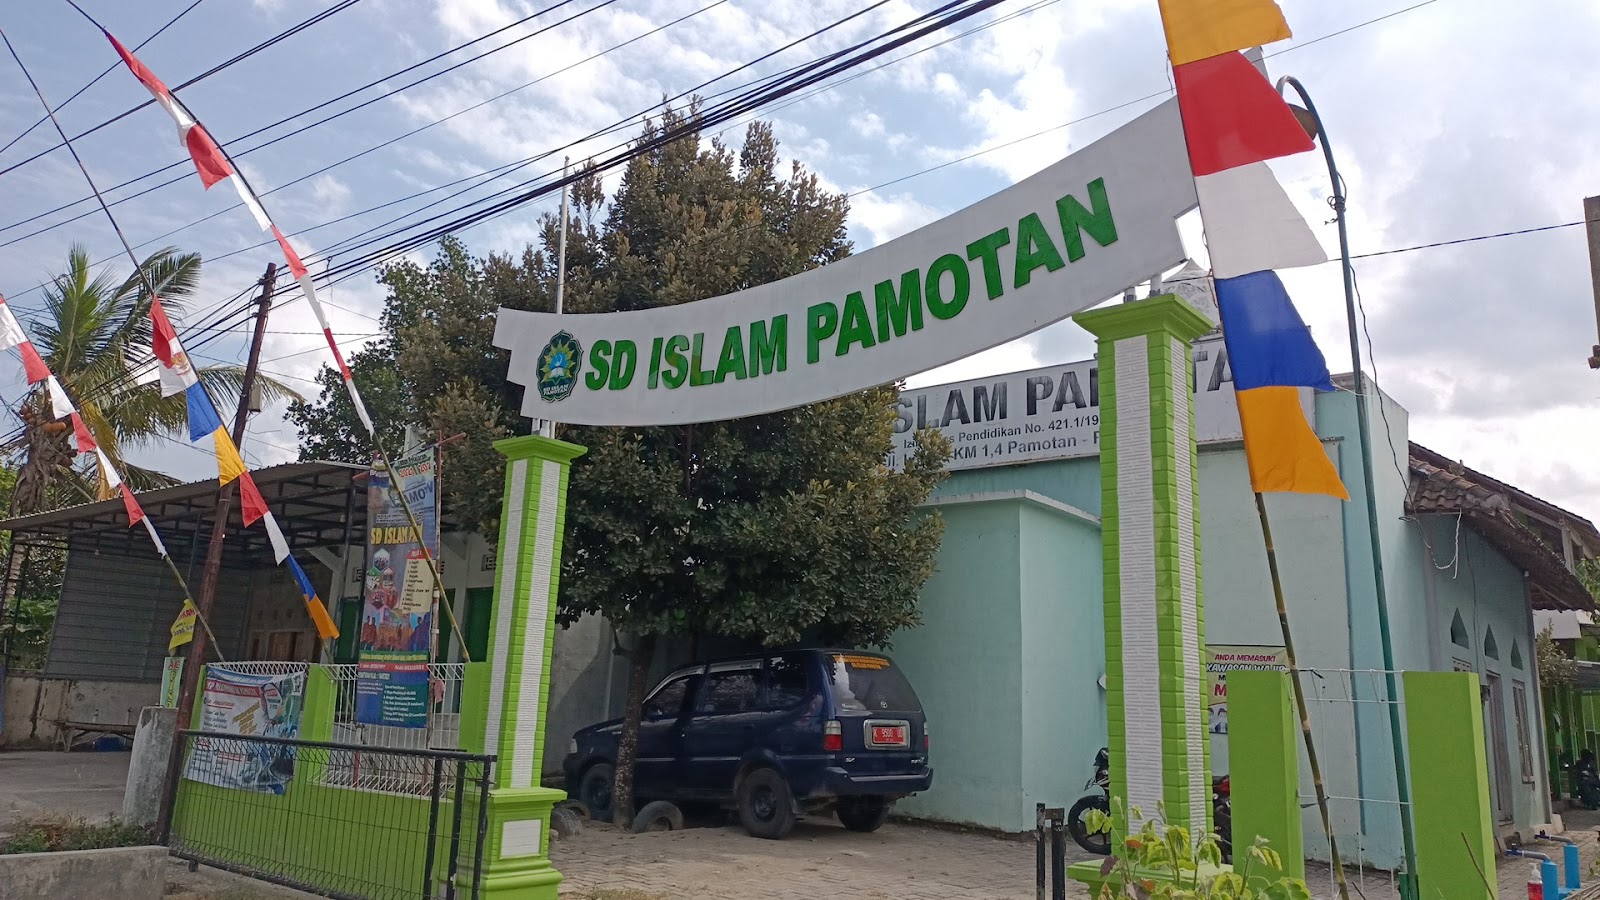 SD ISLAM PAMOTAN